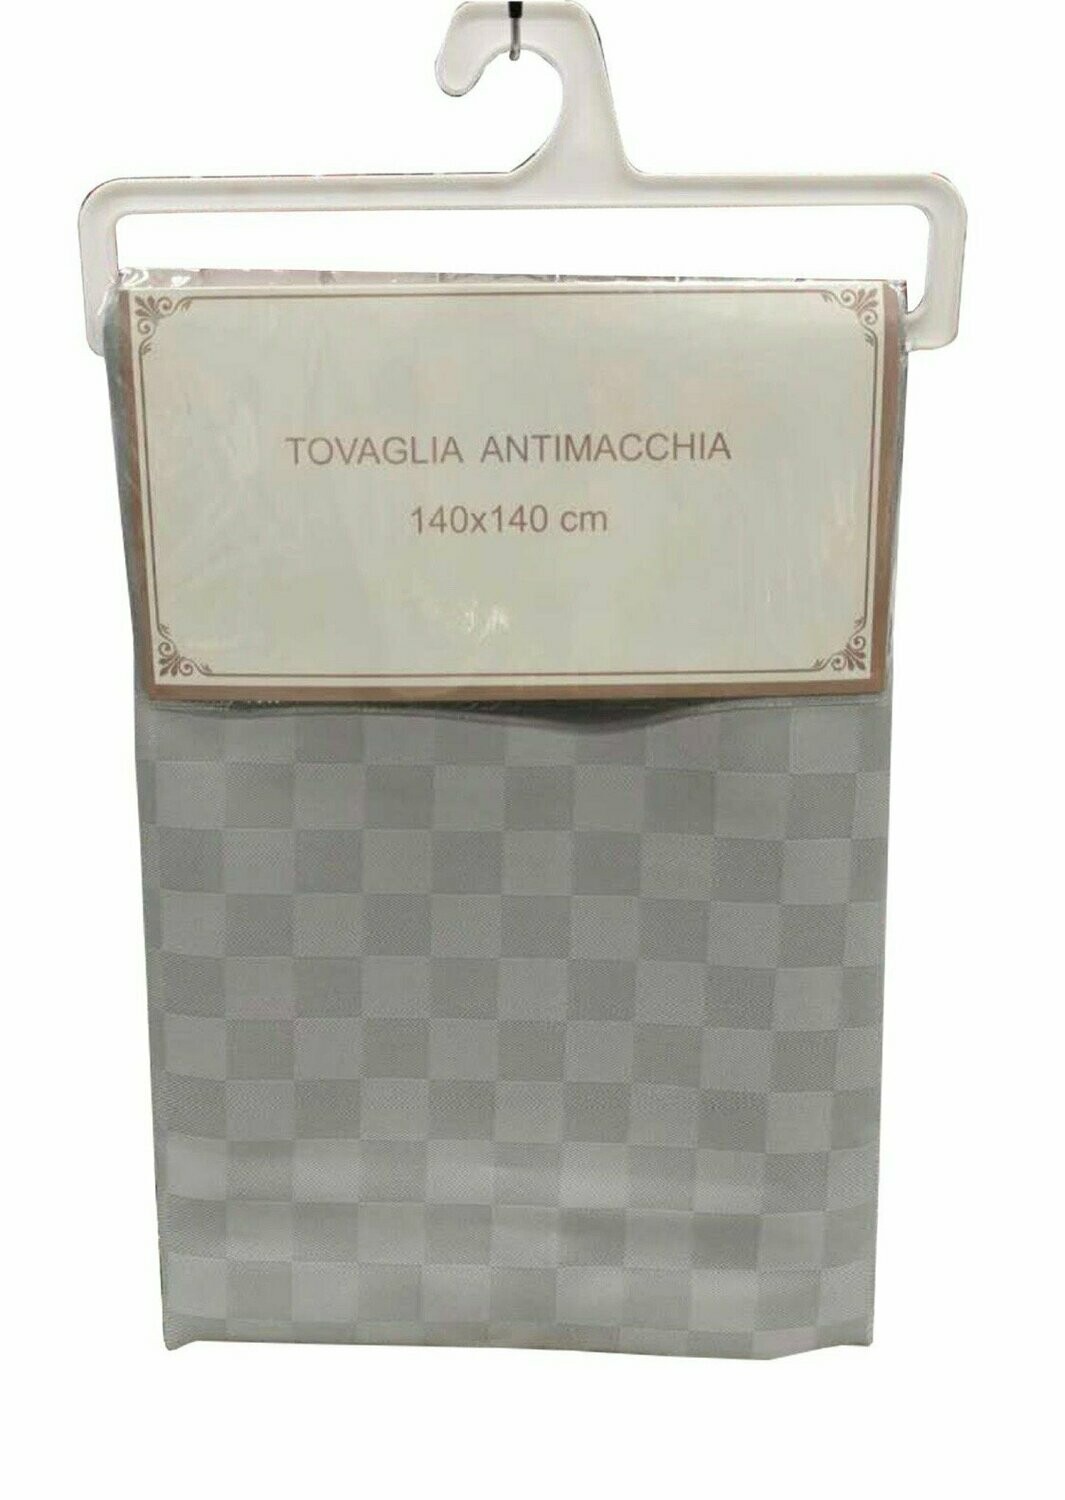 TOVAGLIA ANTIMACCHIA 140X140